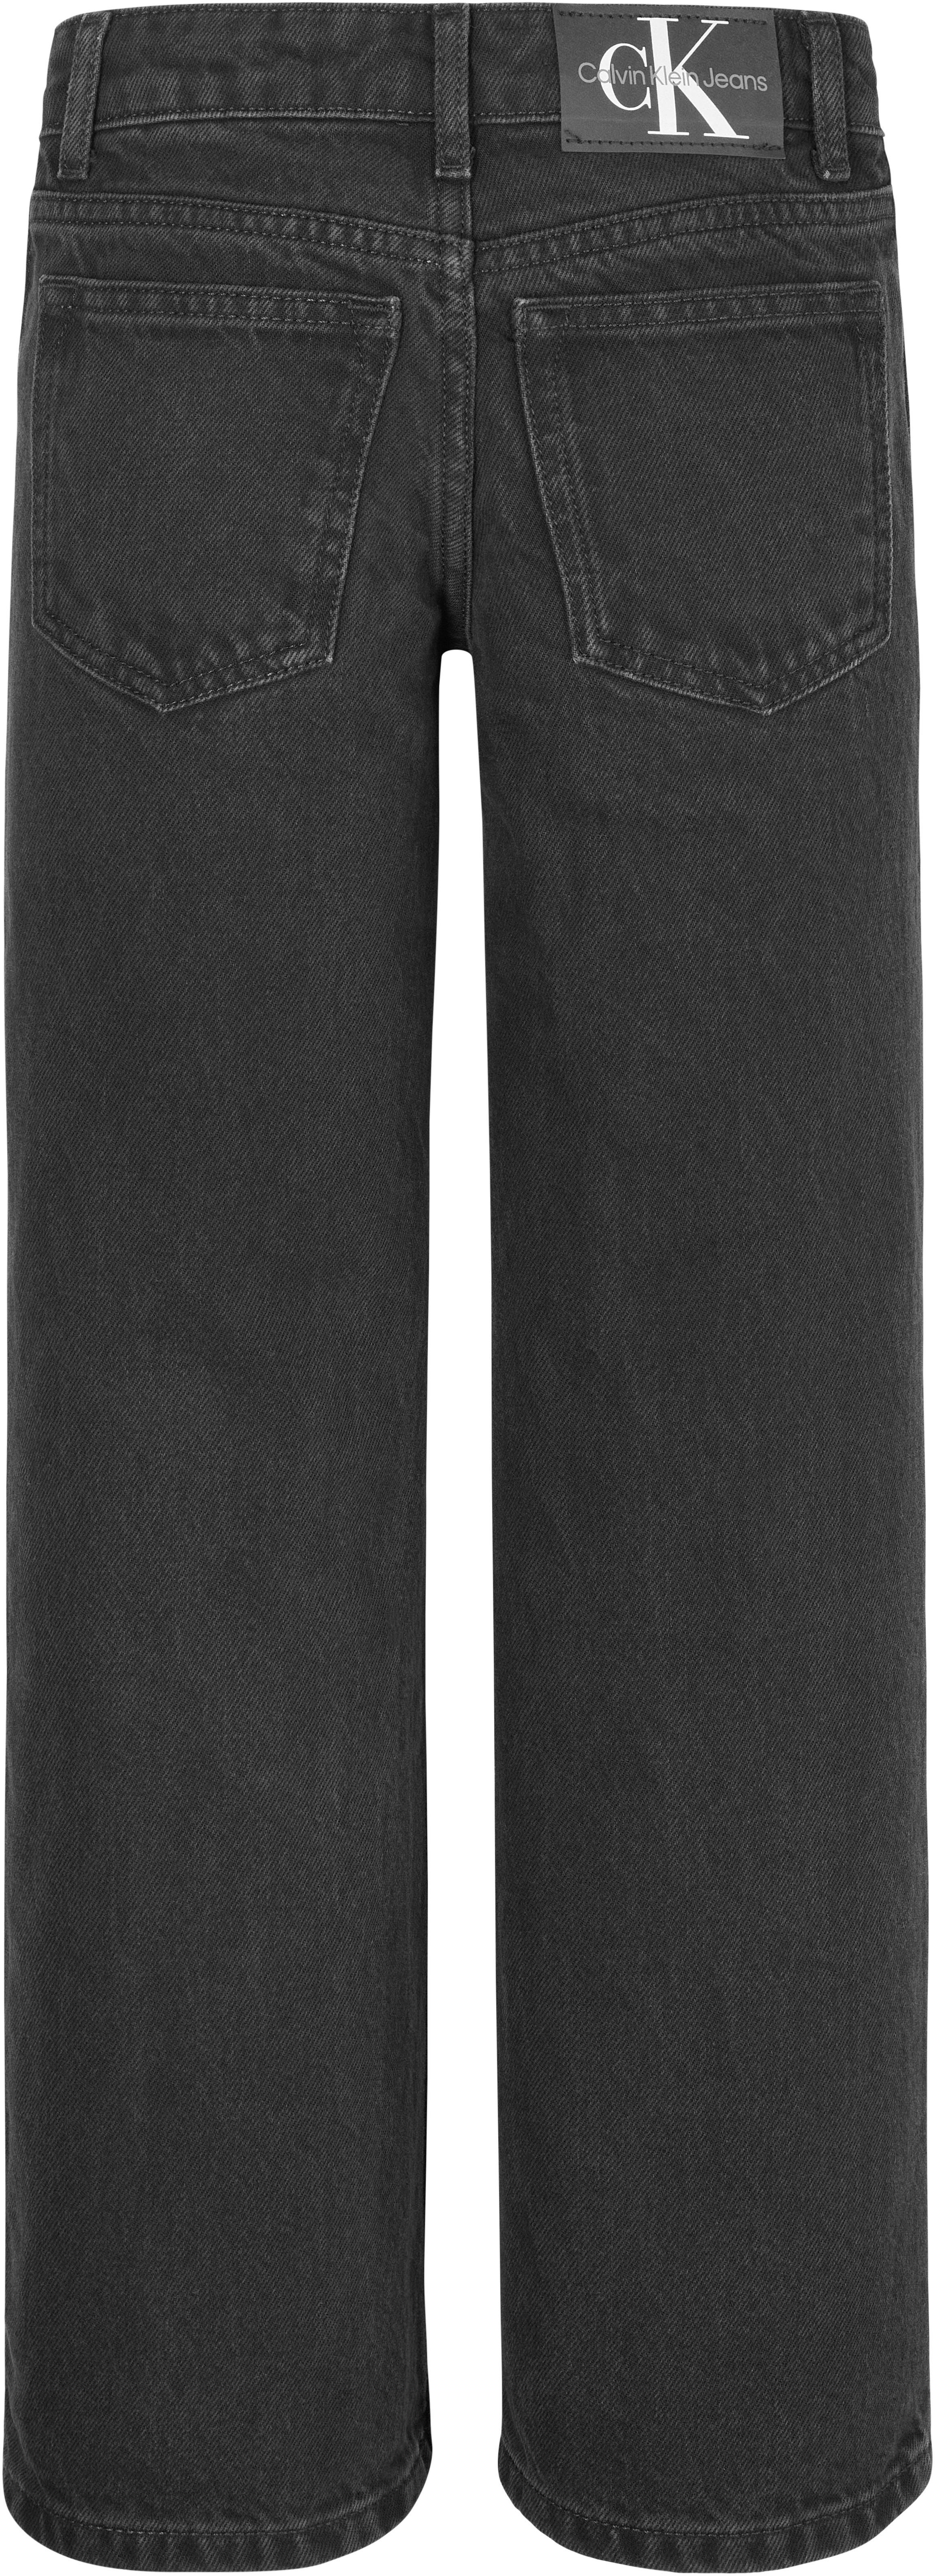 Jeans BLACK Klein WASHED Stretch-Jeans WIDE LEG Calvin